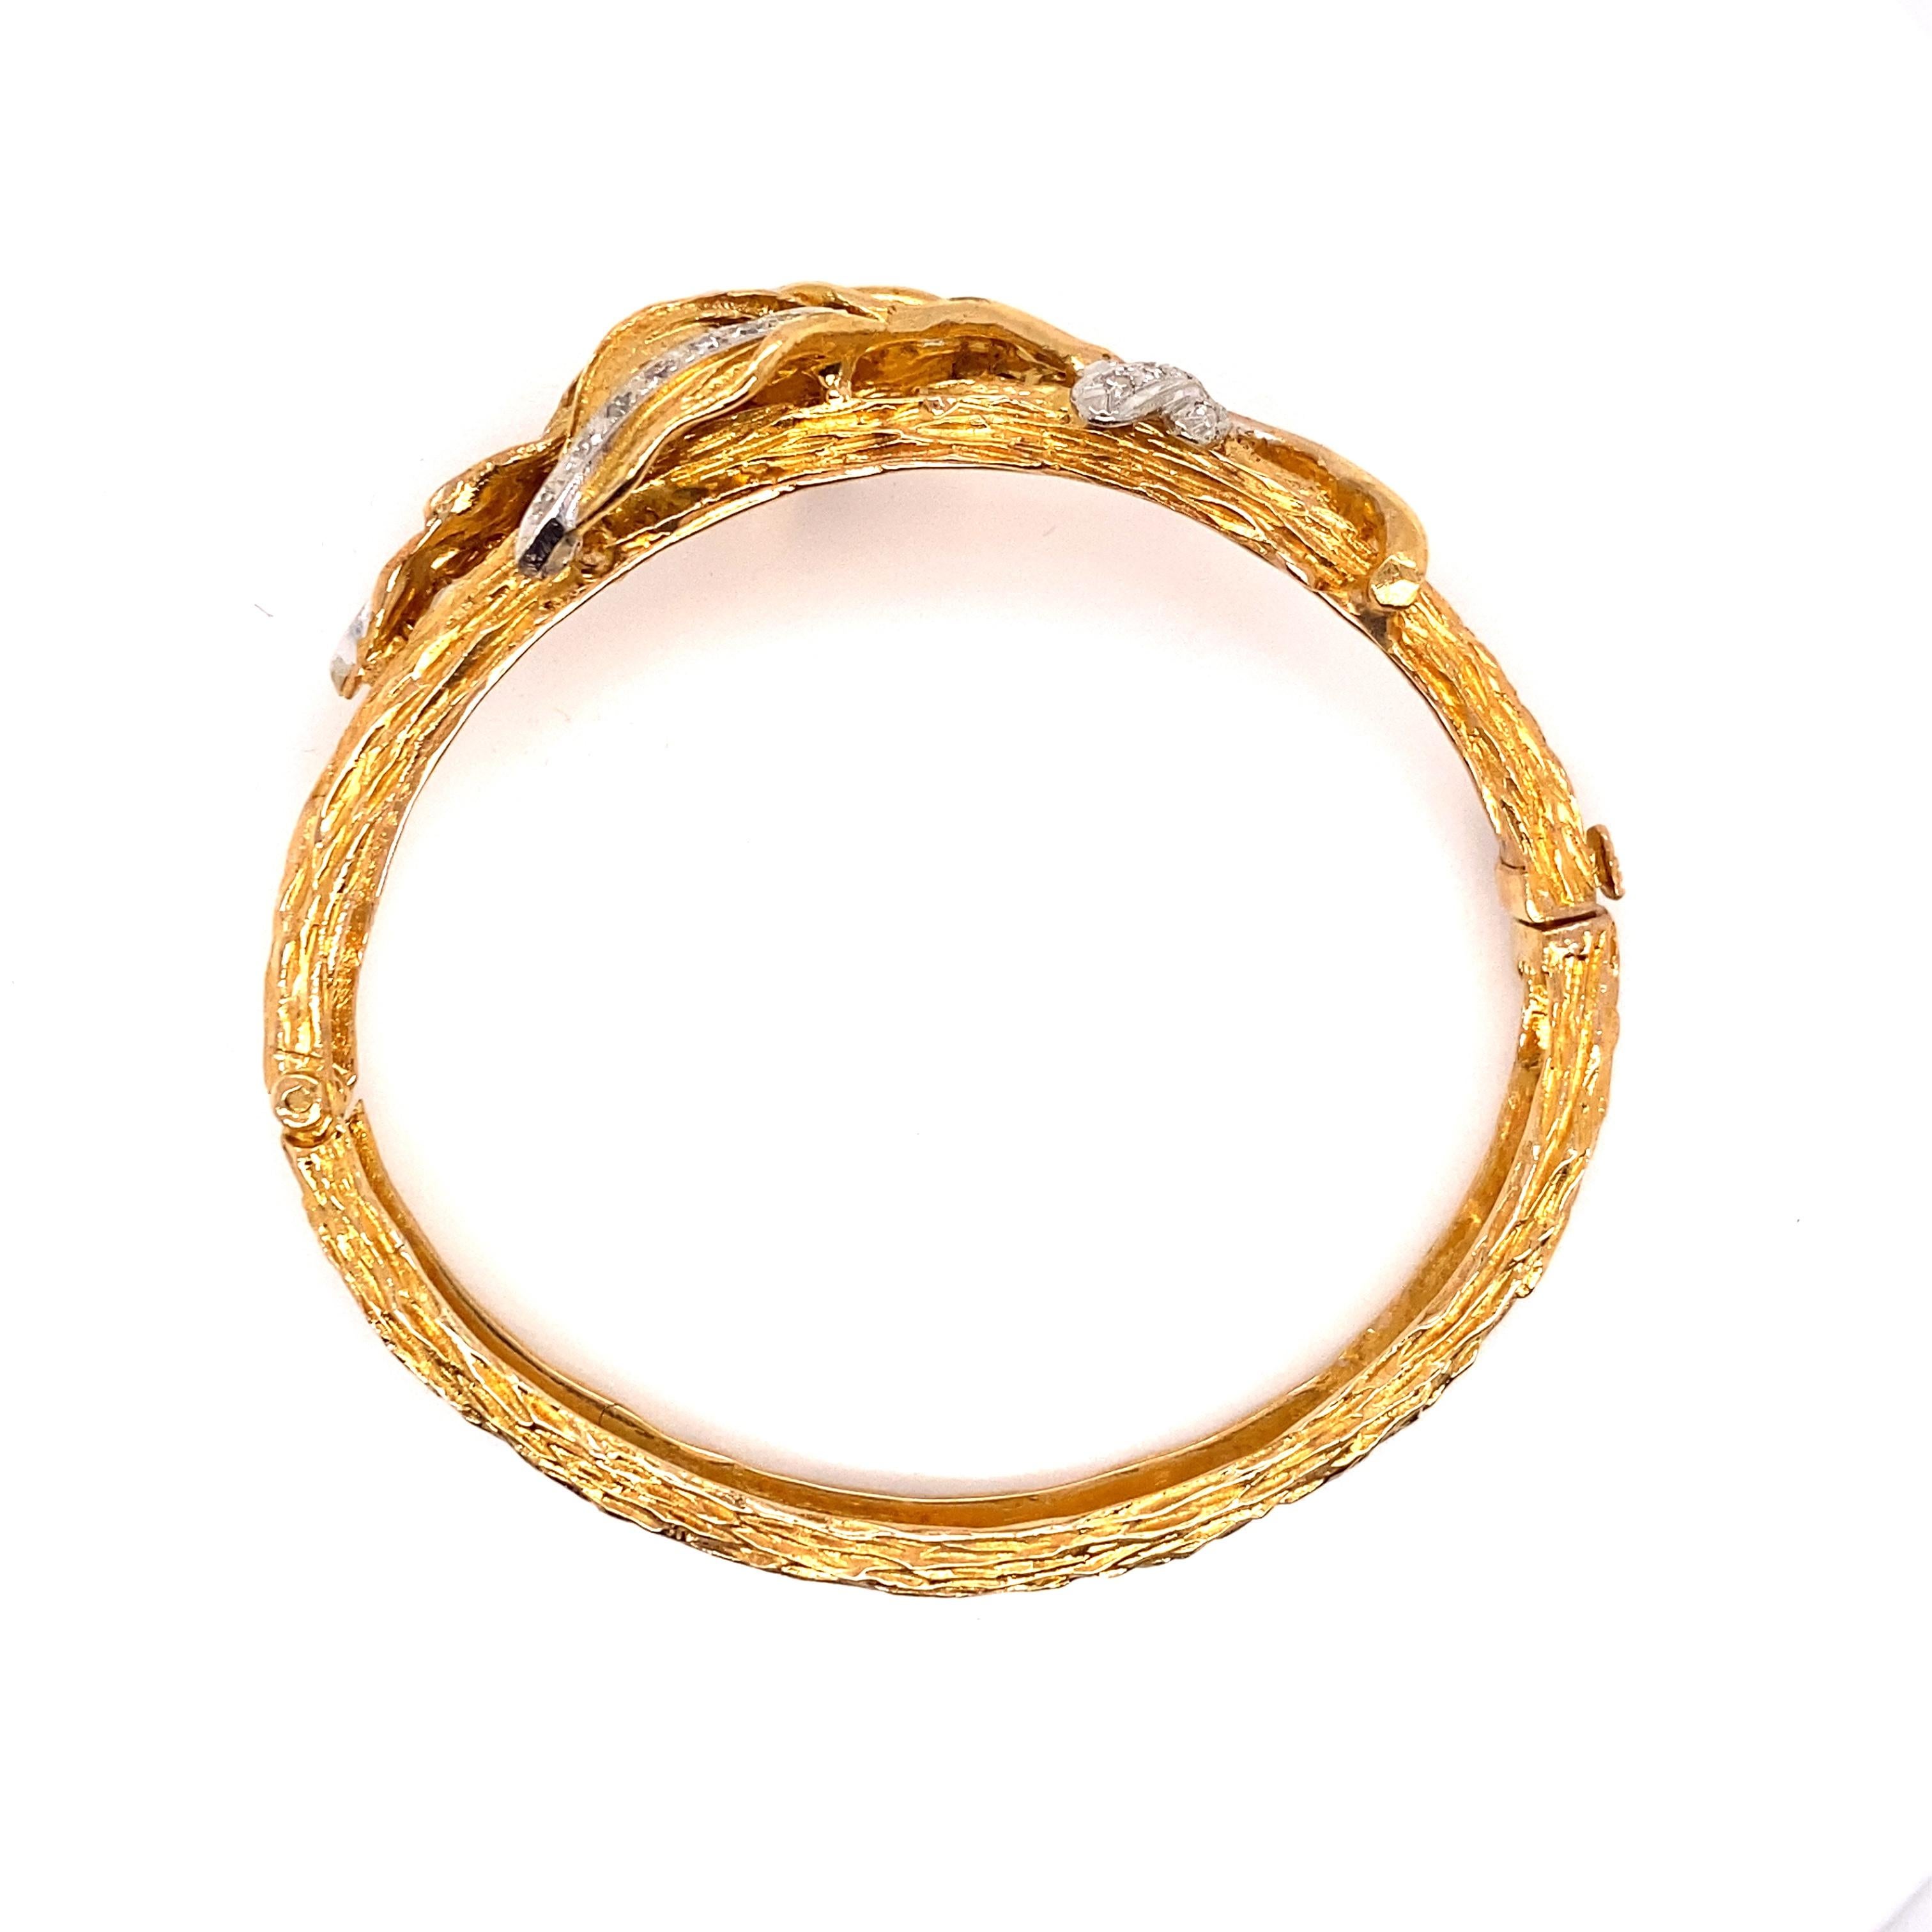 18k gold and diamond leaf bracelet